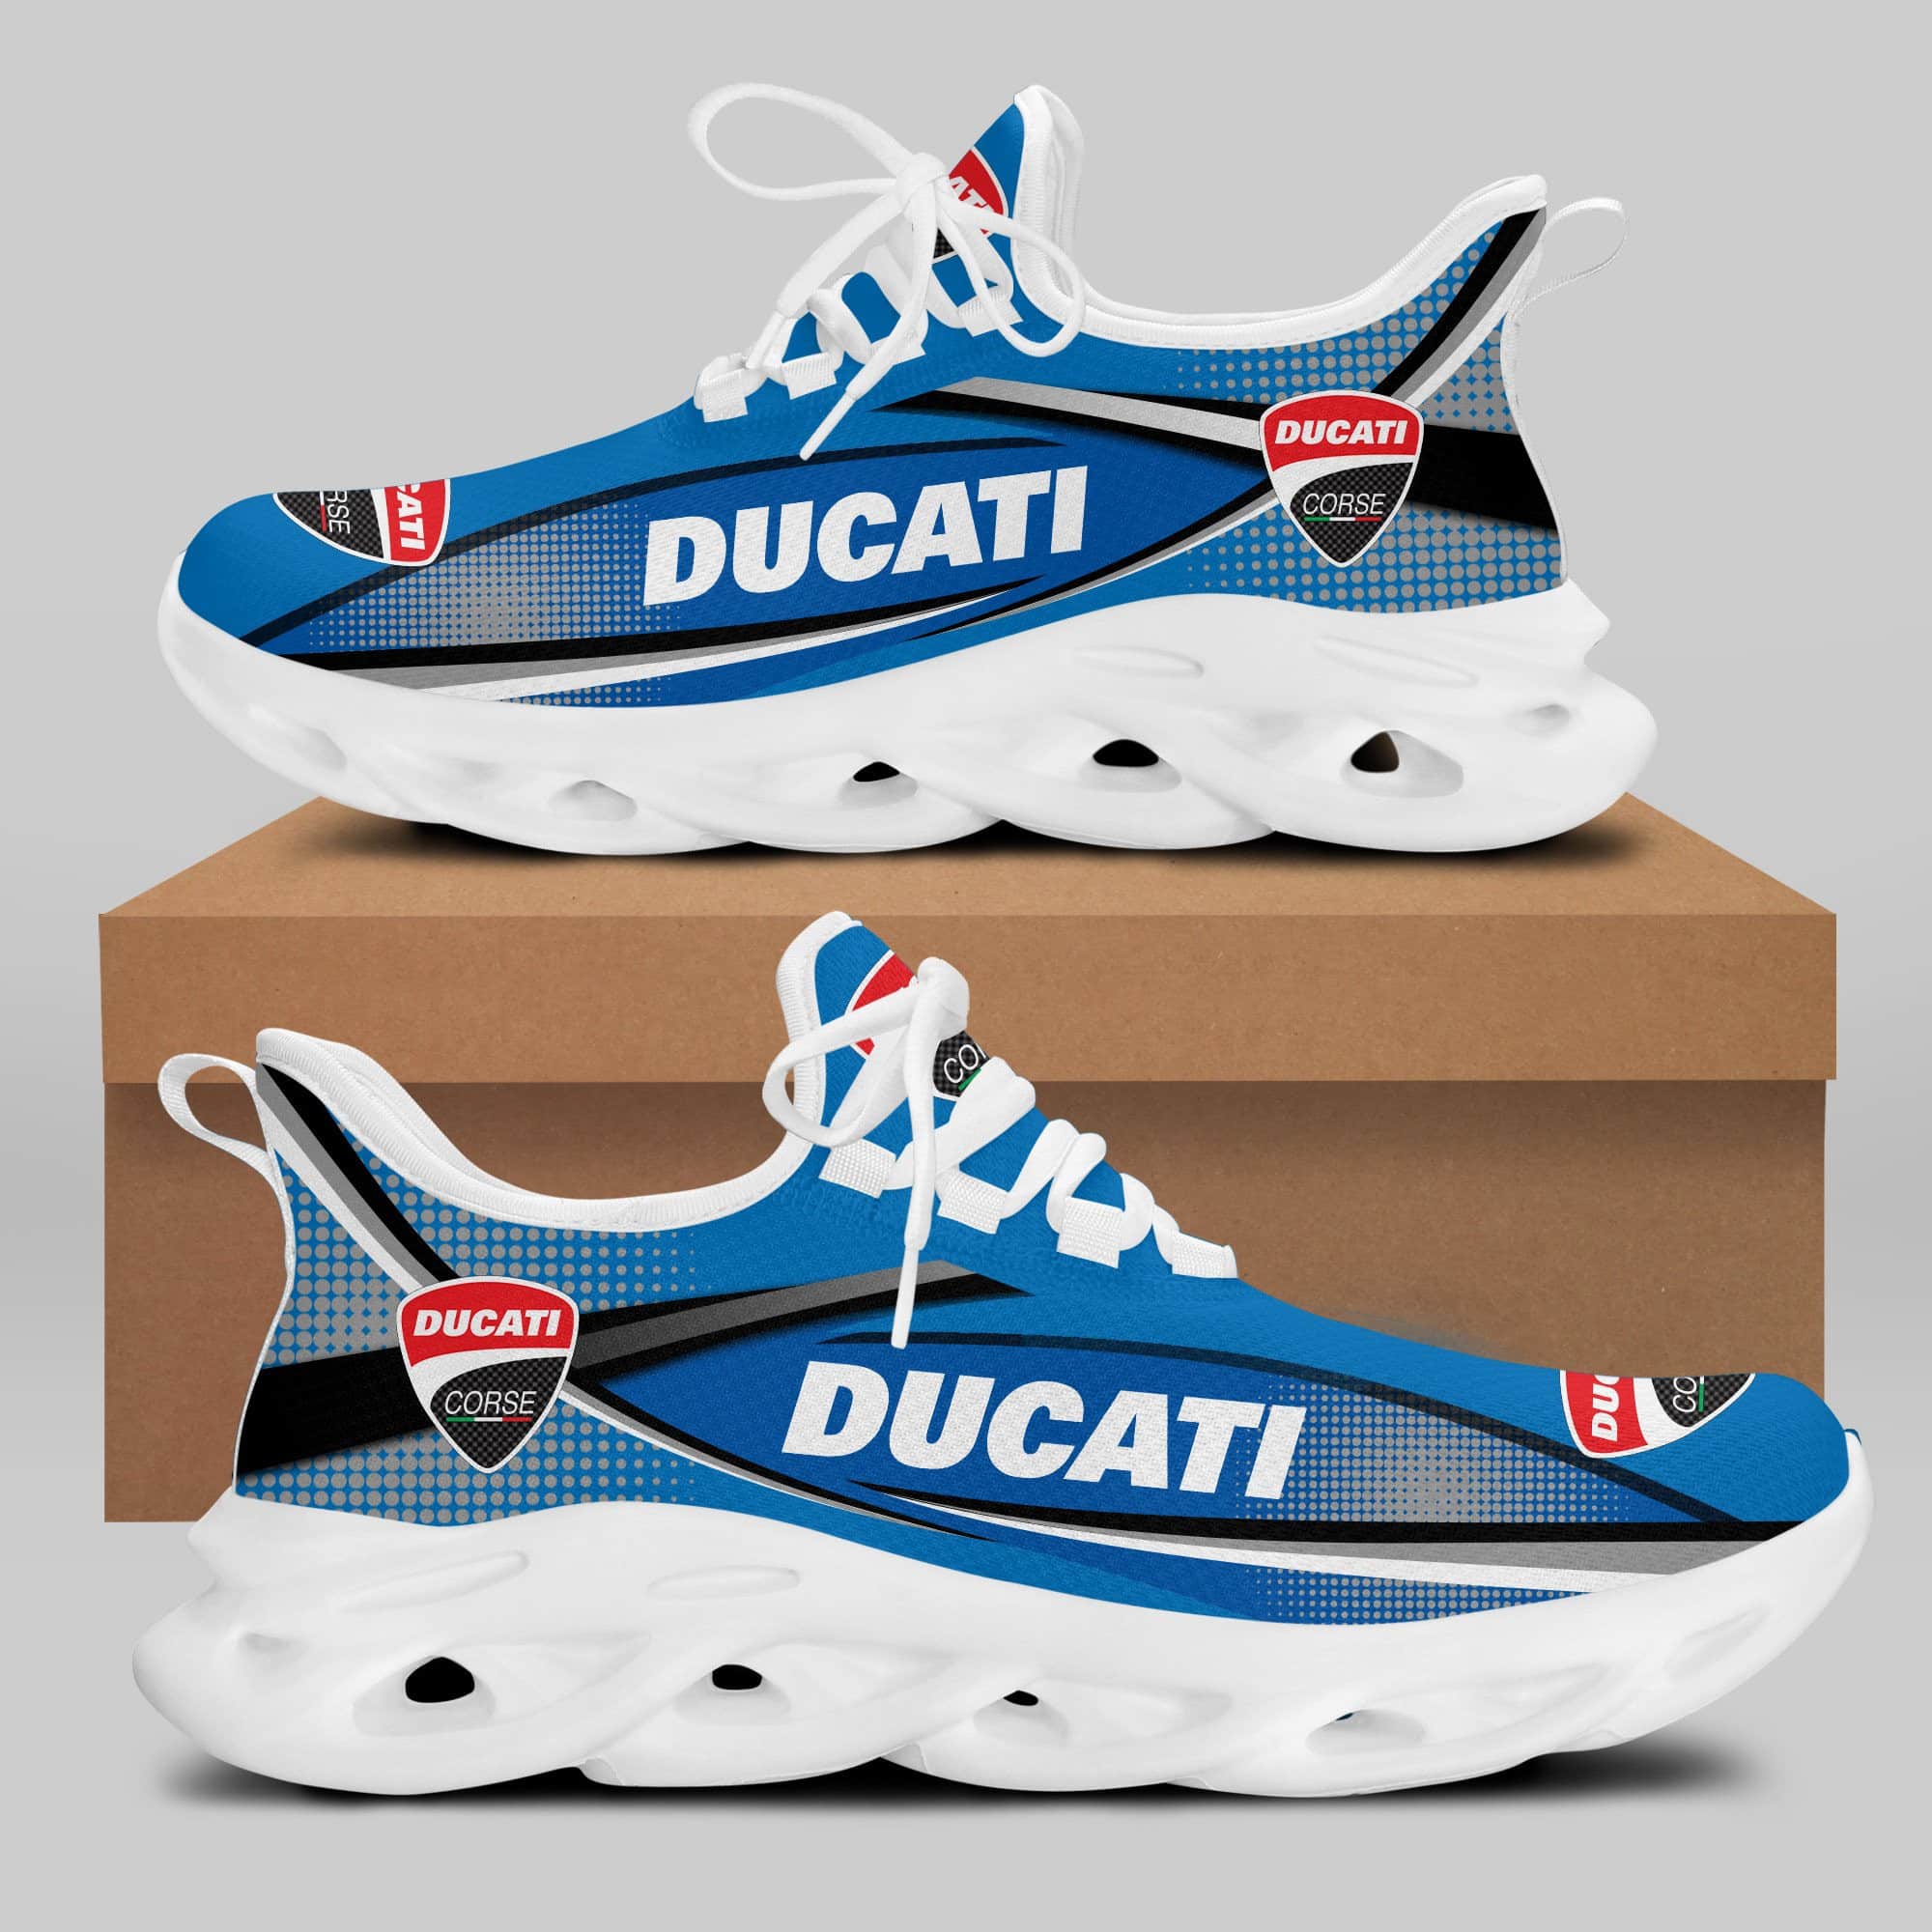 Ducati Racing Running Shoes Max Soul Shoes Sneakers Ver 48 2